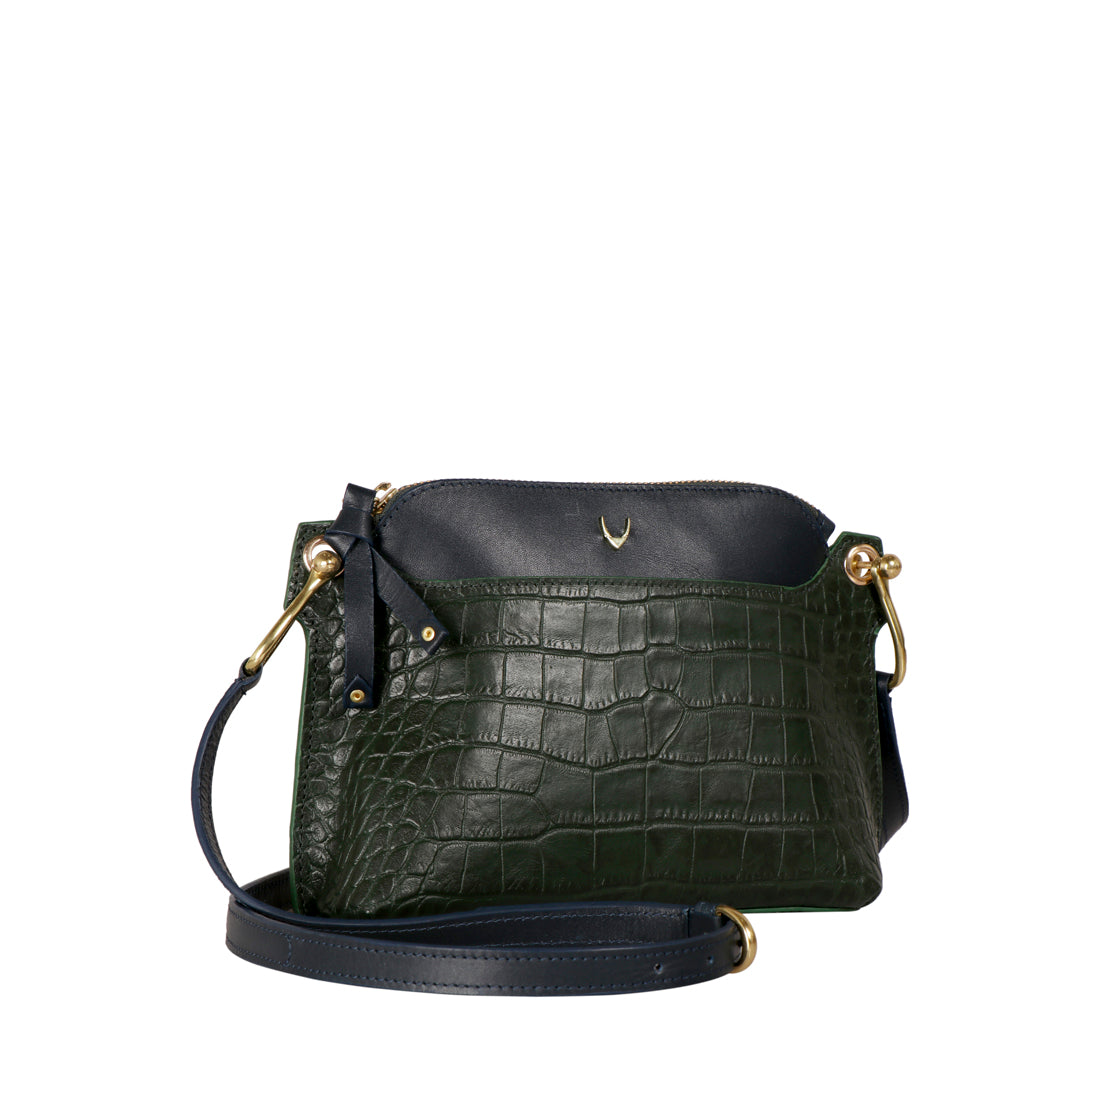 Buy Green Fl Kelly 02 Sling Bag Online - Hidesign